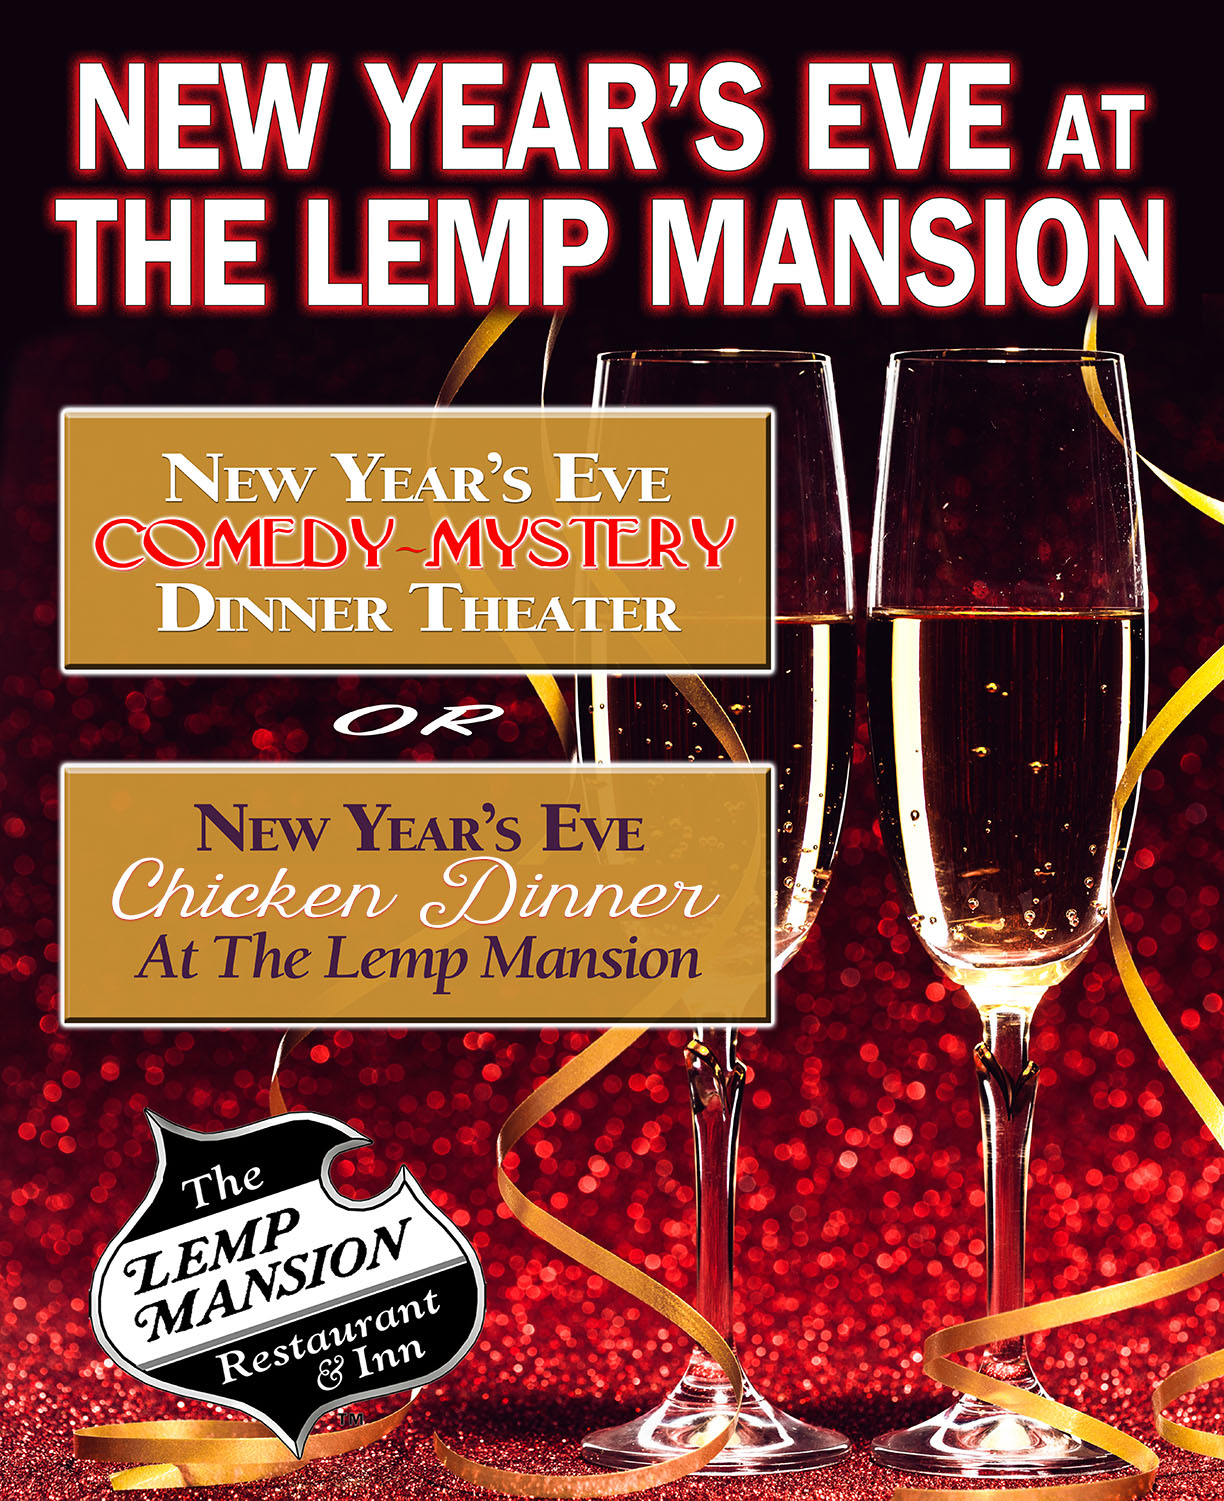 lemp mansion New Year's Eve celebration events